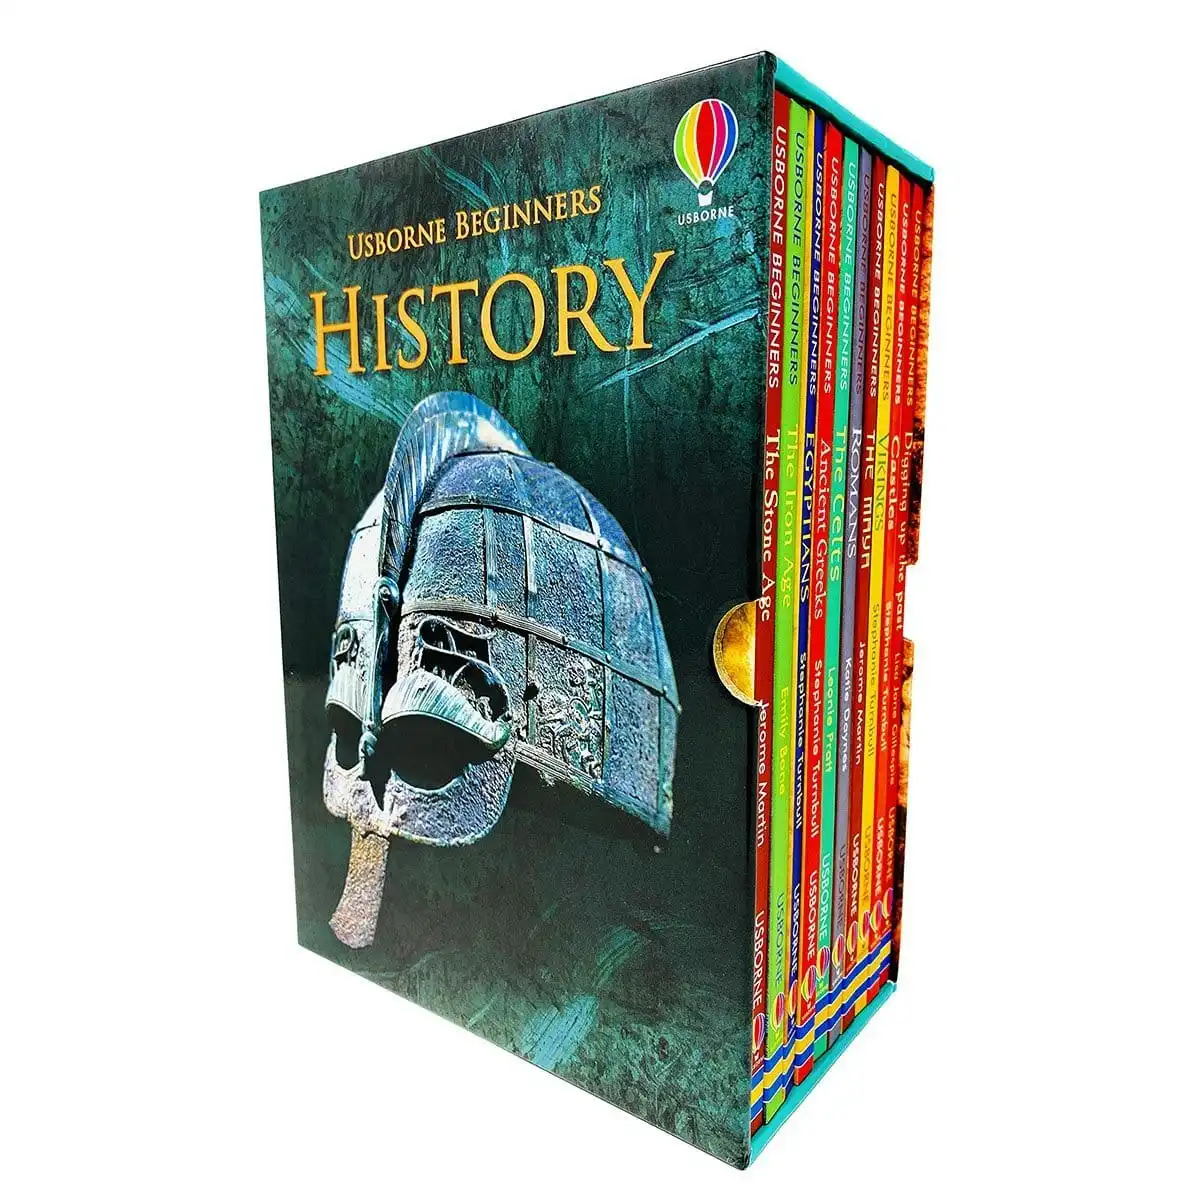 Usborne Beginners History - 10 Copy Box Set